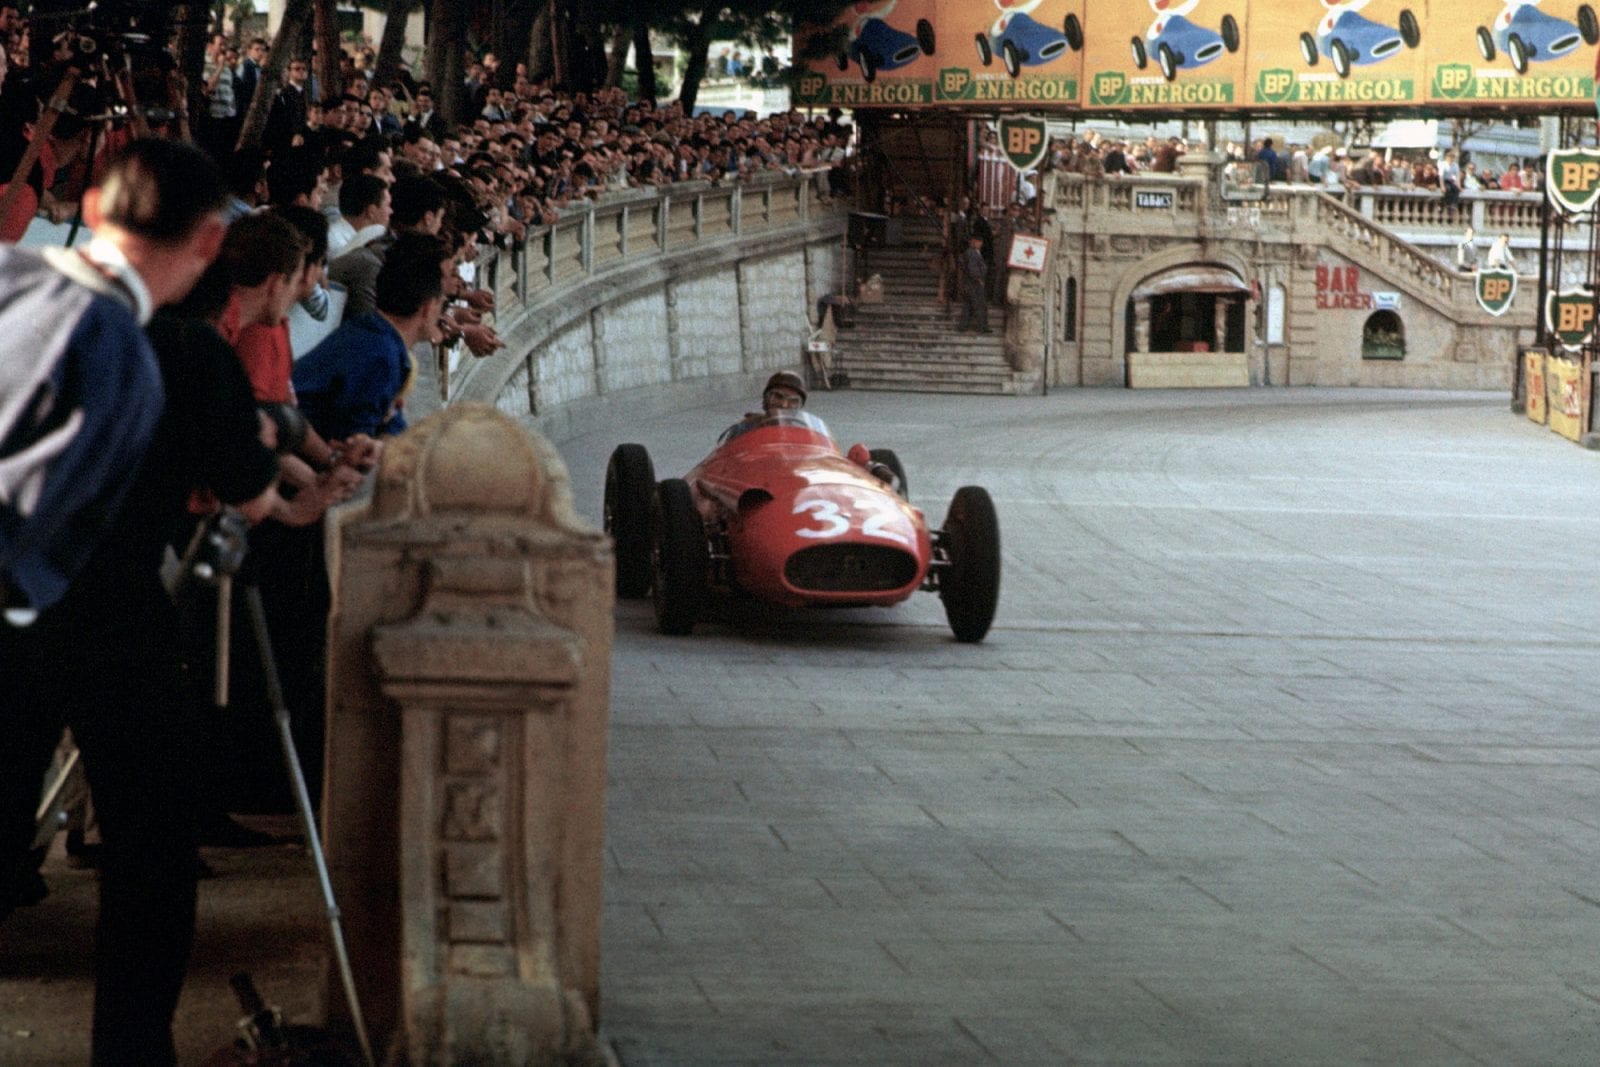 Juan Manuel Fangio races past the crowd in his Ferrari at the 1957 Monaco Grand Prix.